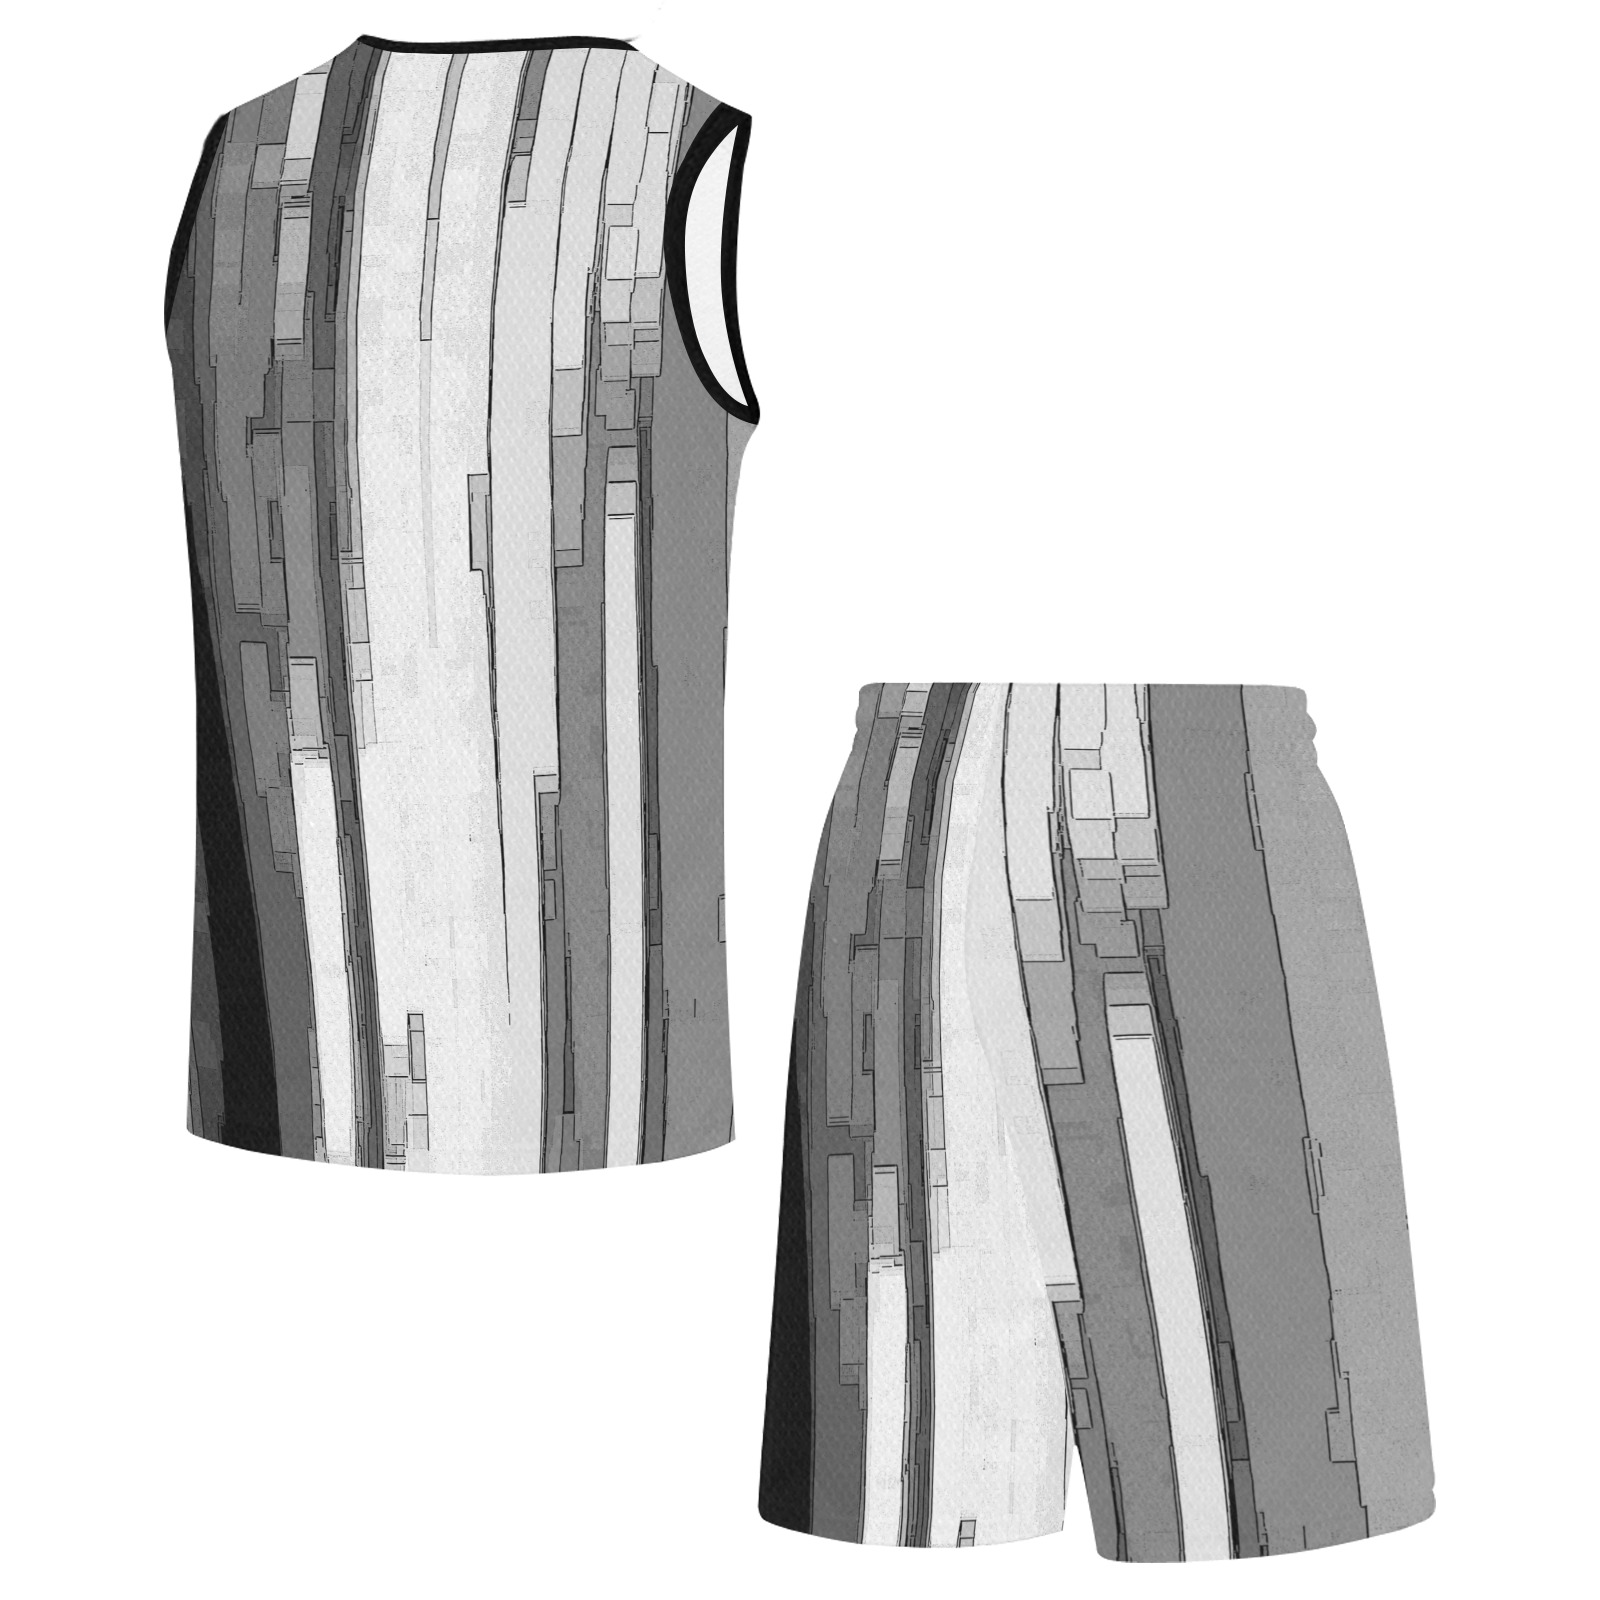 Greyscale Abstract B&W Art All Over Print Basketball Uniform